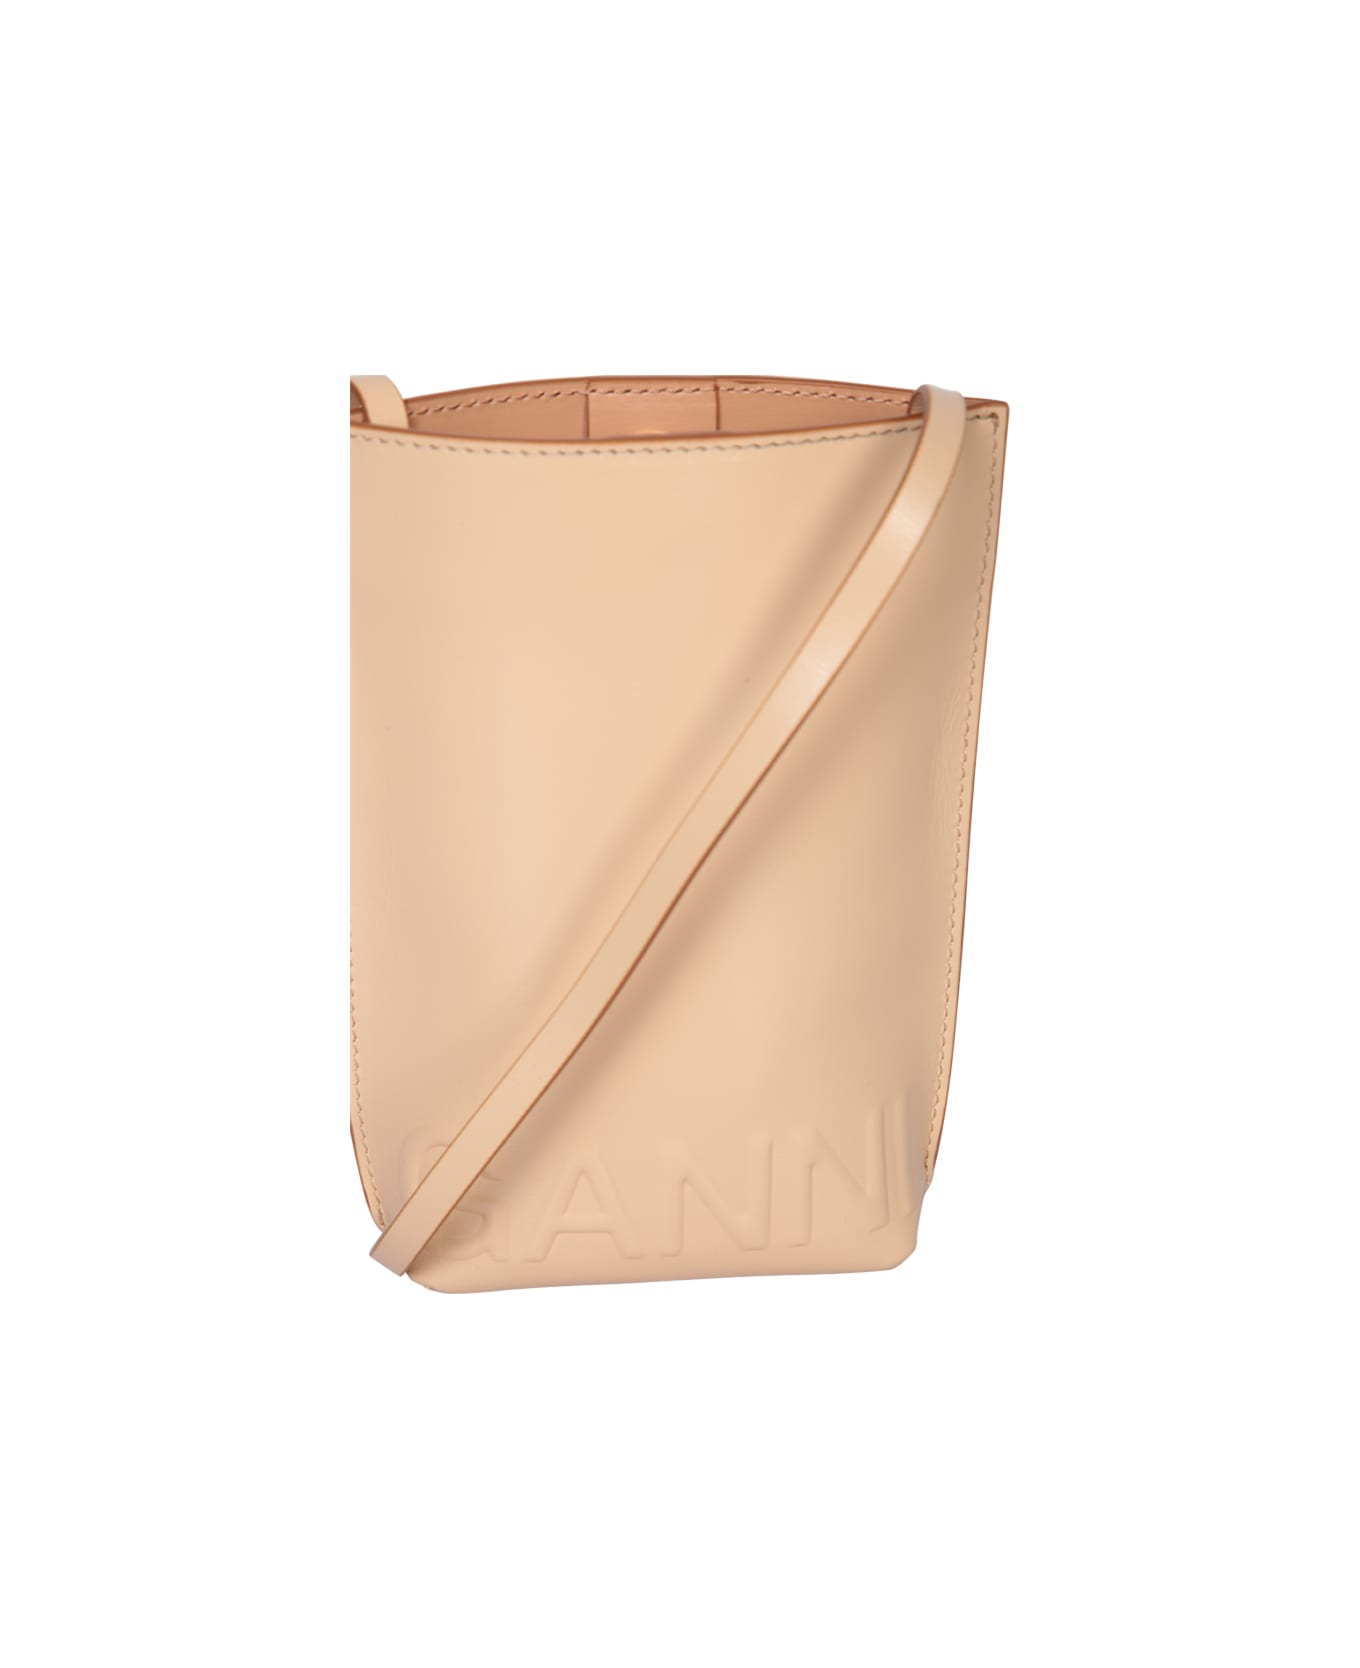 Ganni Cream Leather Bag - BEIGE ショルダーバッグ